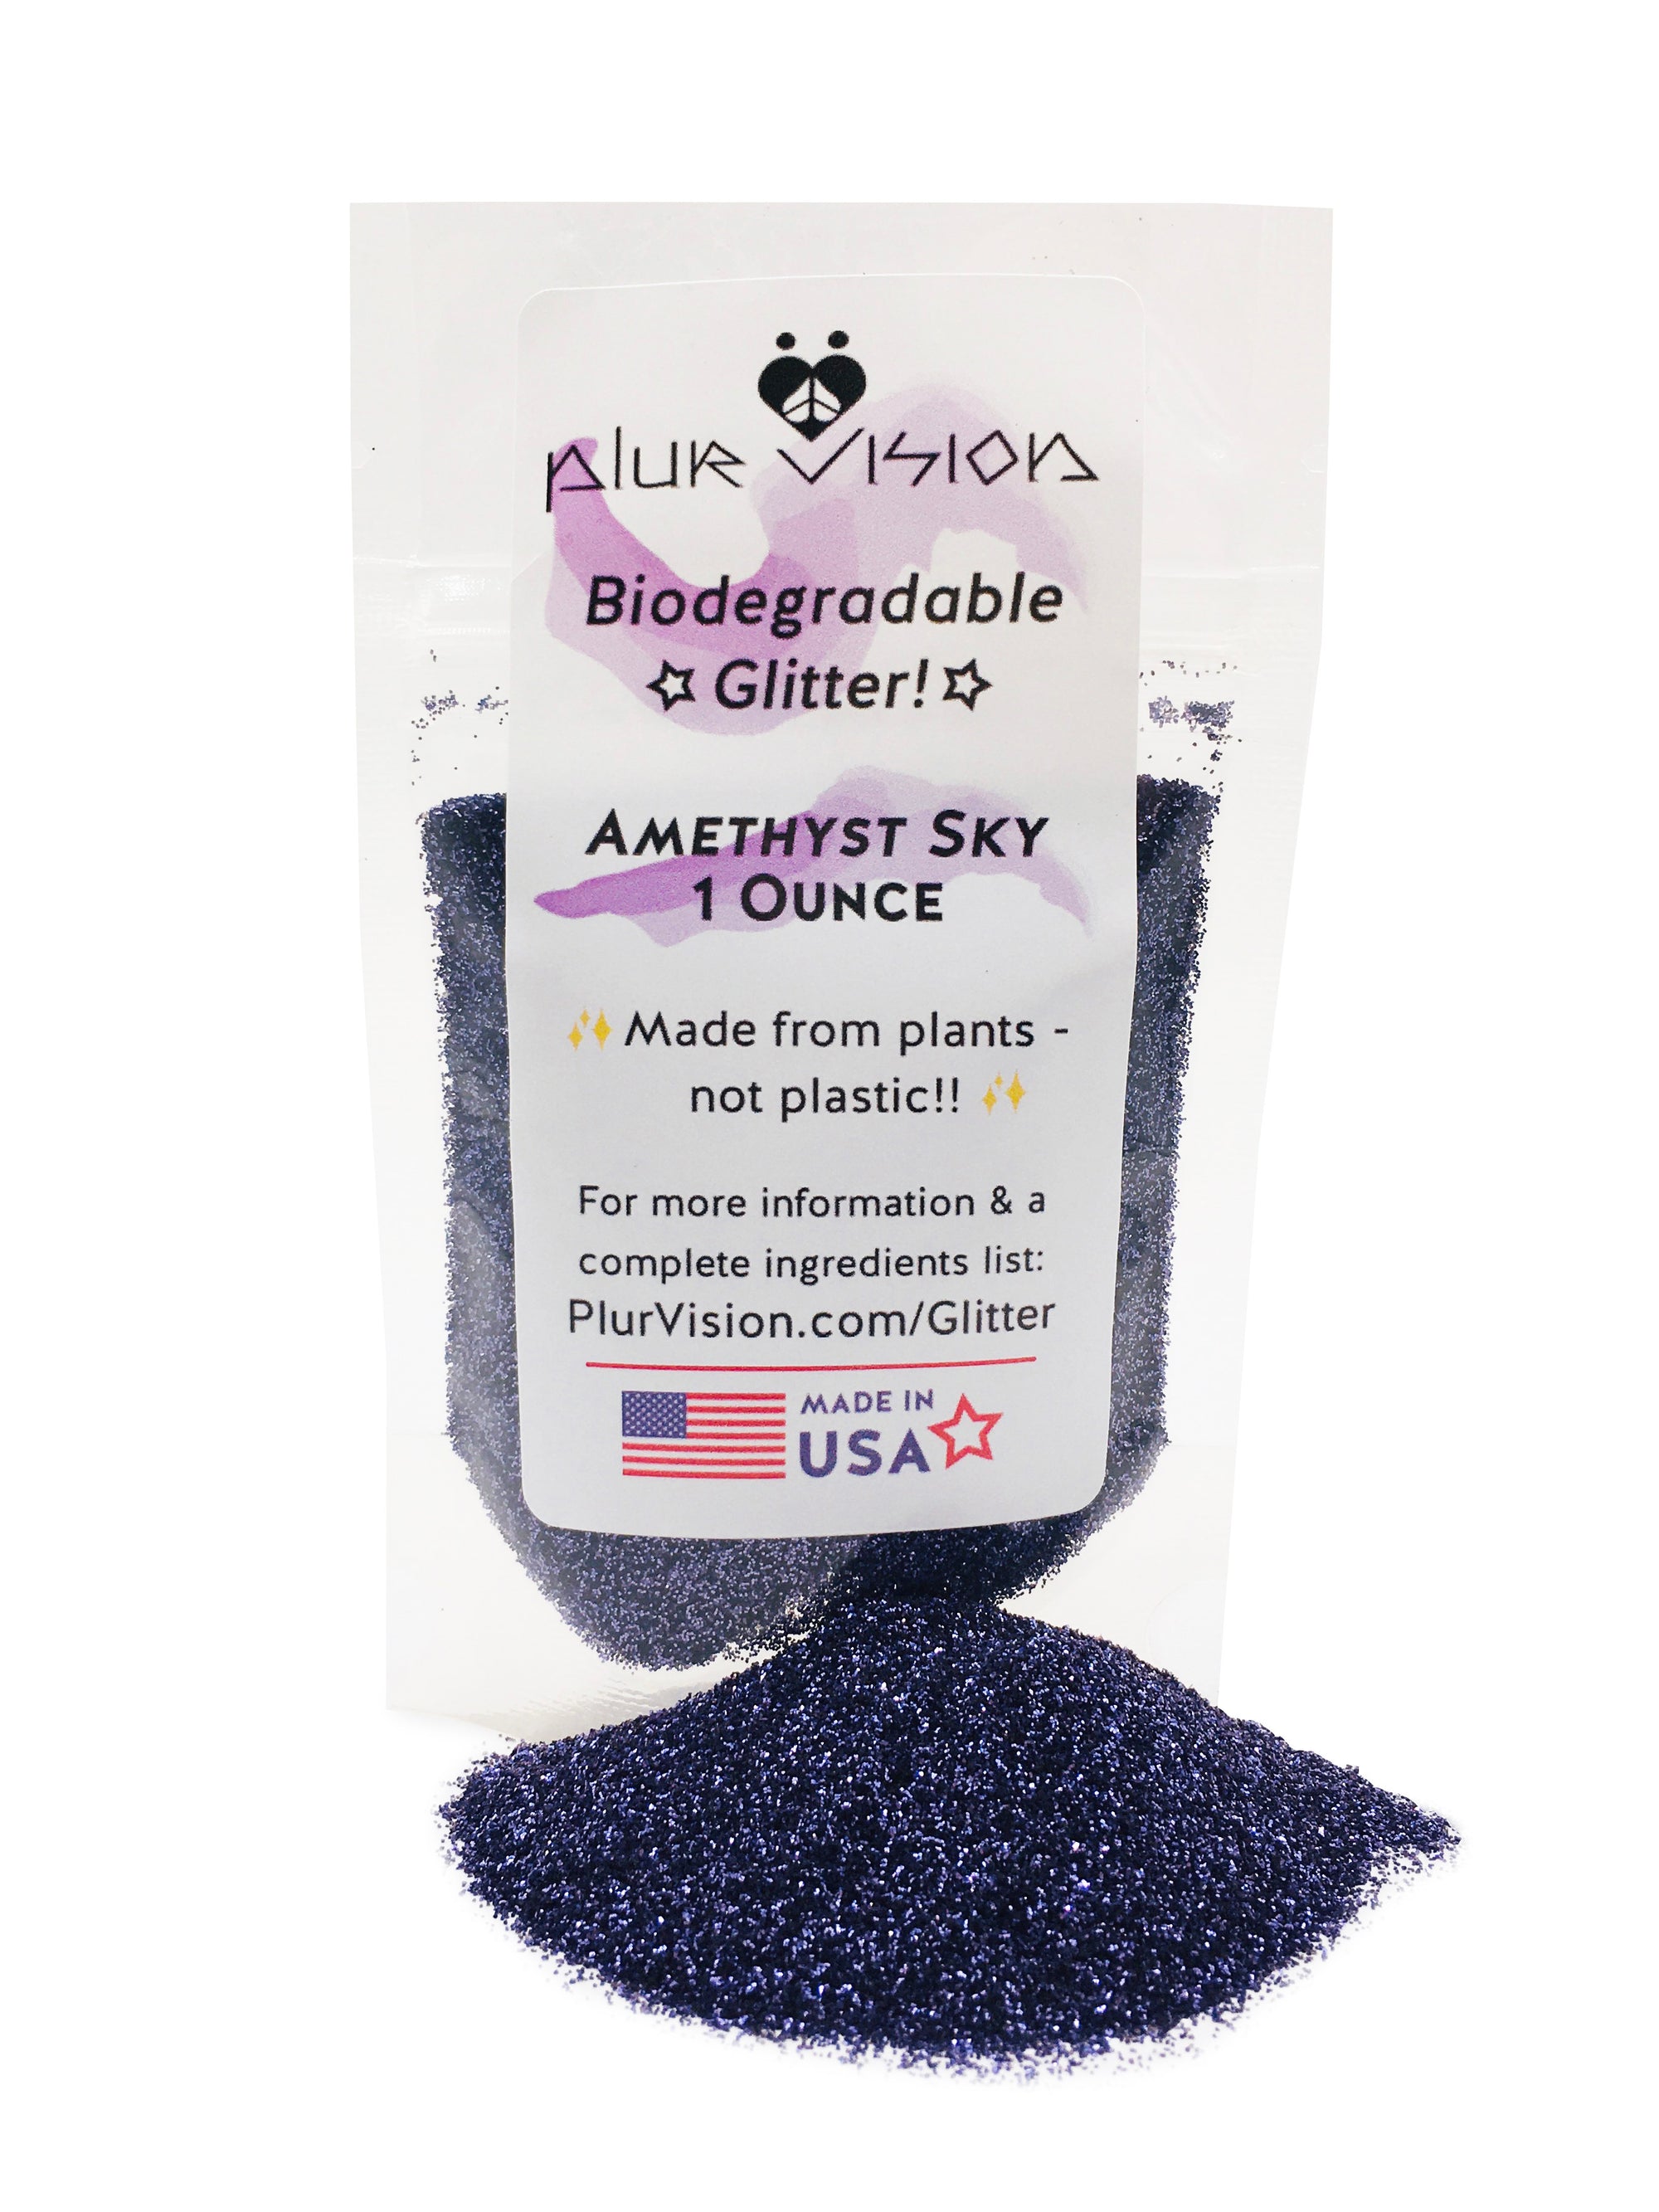 ✨ Amethyst Sky Biodegradable Glitter! ✨